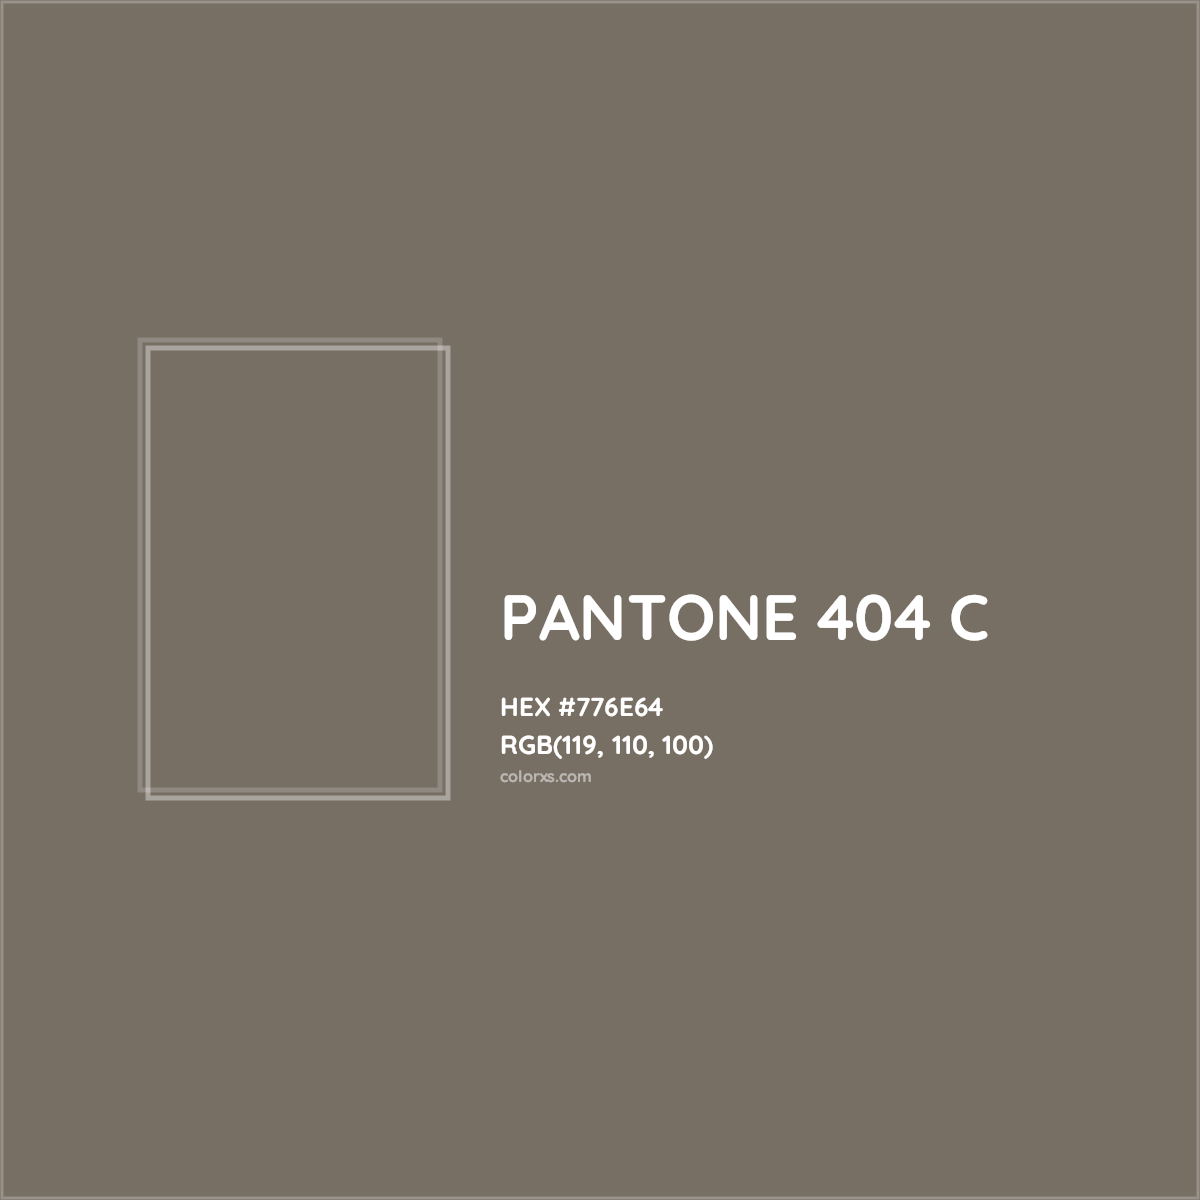 HEX #776E64 PANTONE 404 C CMS Pantone PMS - Color Code